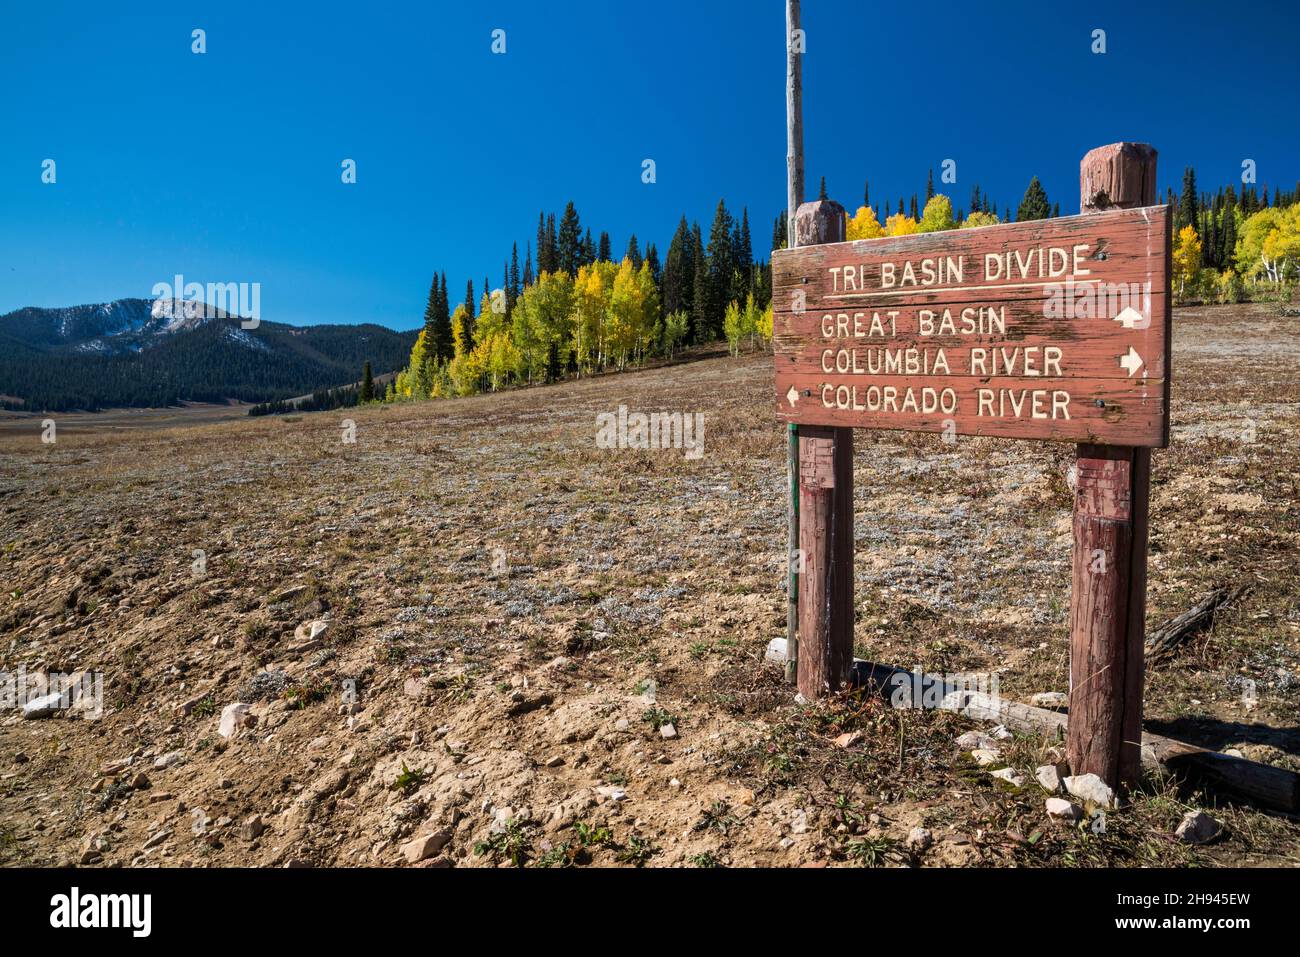 Sign at Tri Basin Divide, separating Great Basin, Columbia River and Colorado River watersheds, Greys River Rd, Bridger Teton National Forest, Wyoming Stock Photo